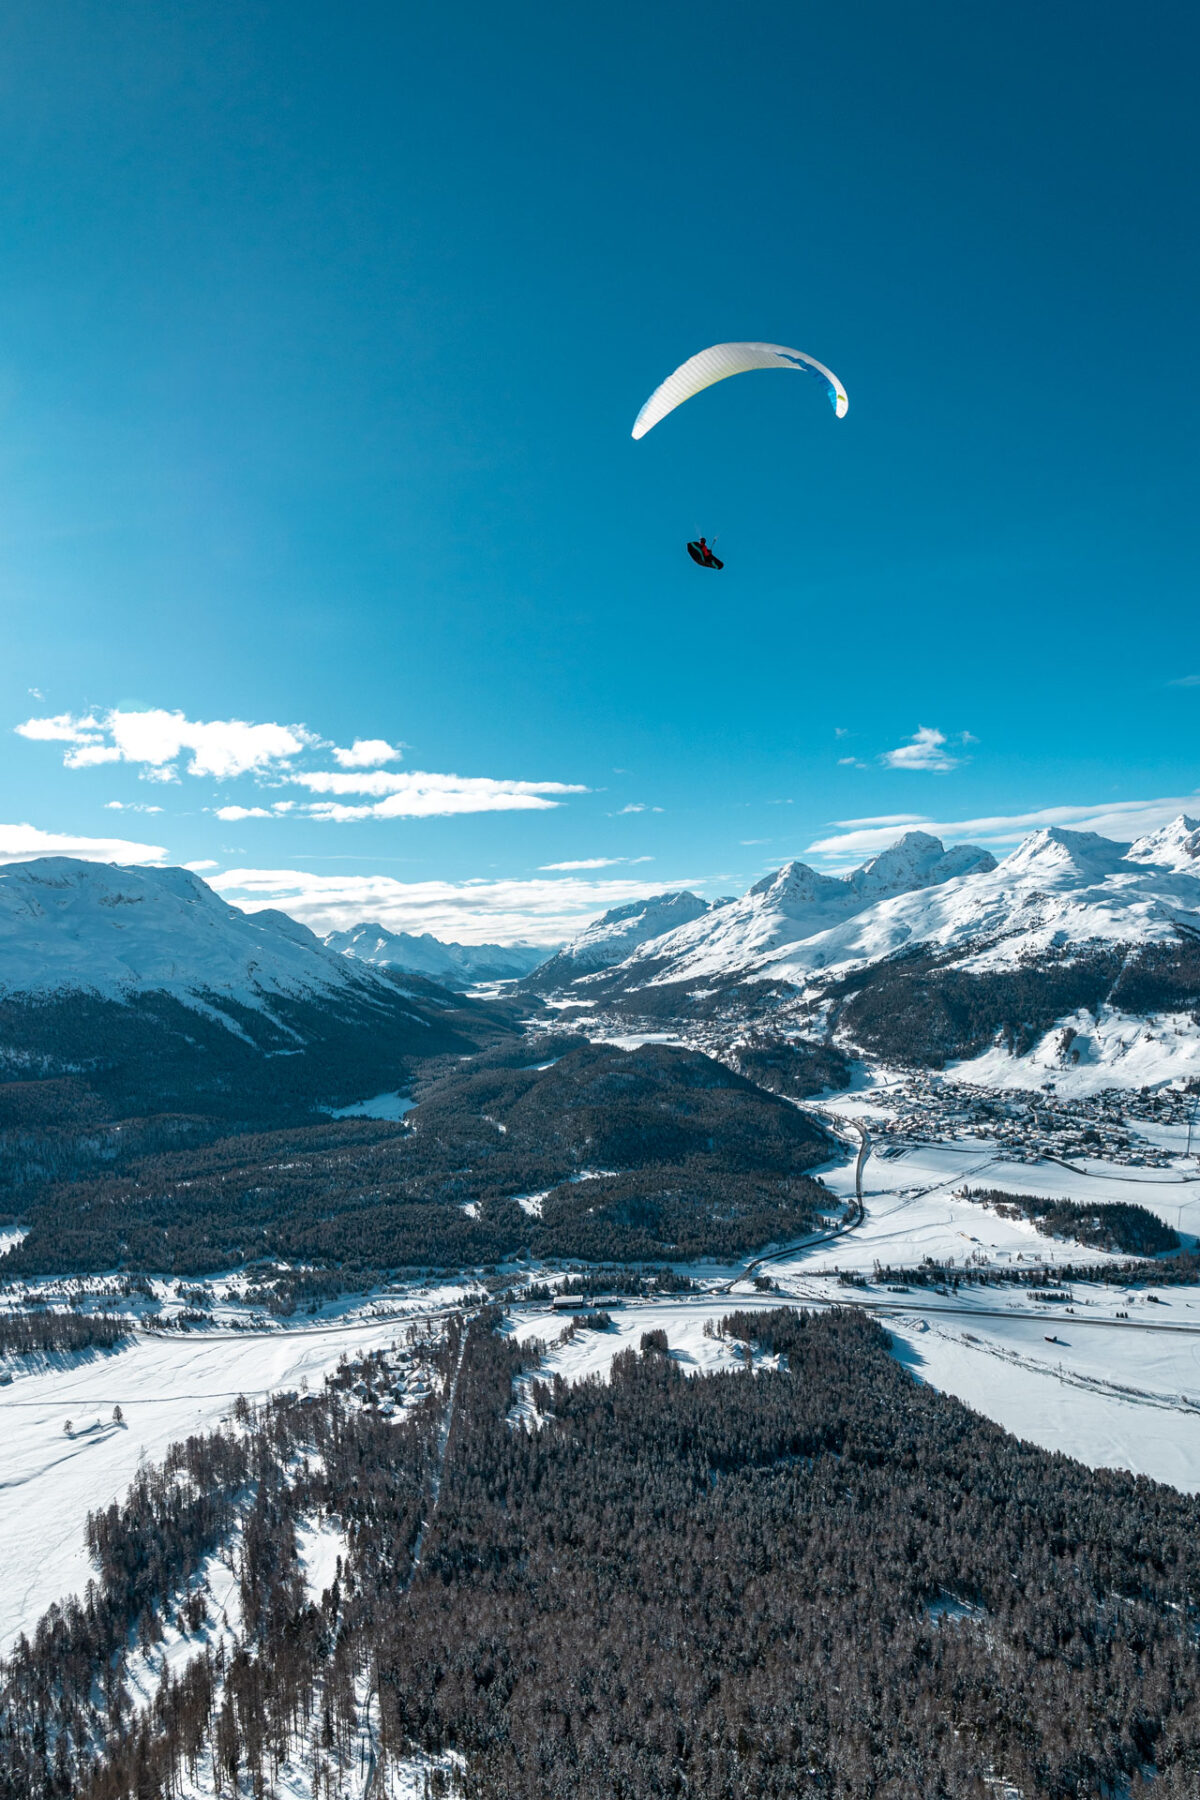 Hotel Hauser St. Moritz - Upper Engadine surroundings Winter activities - Paragliding